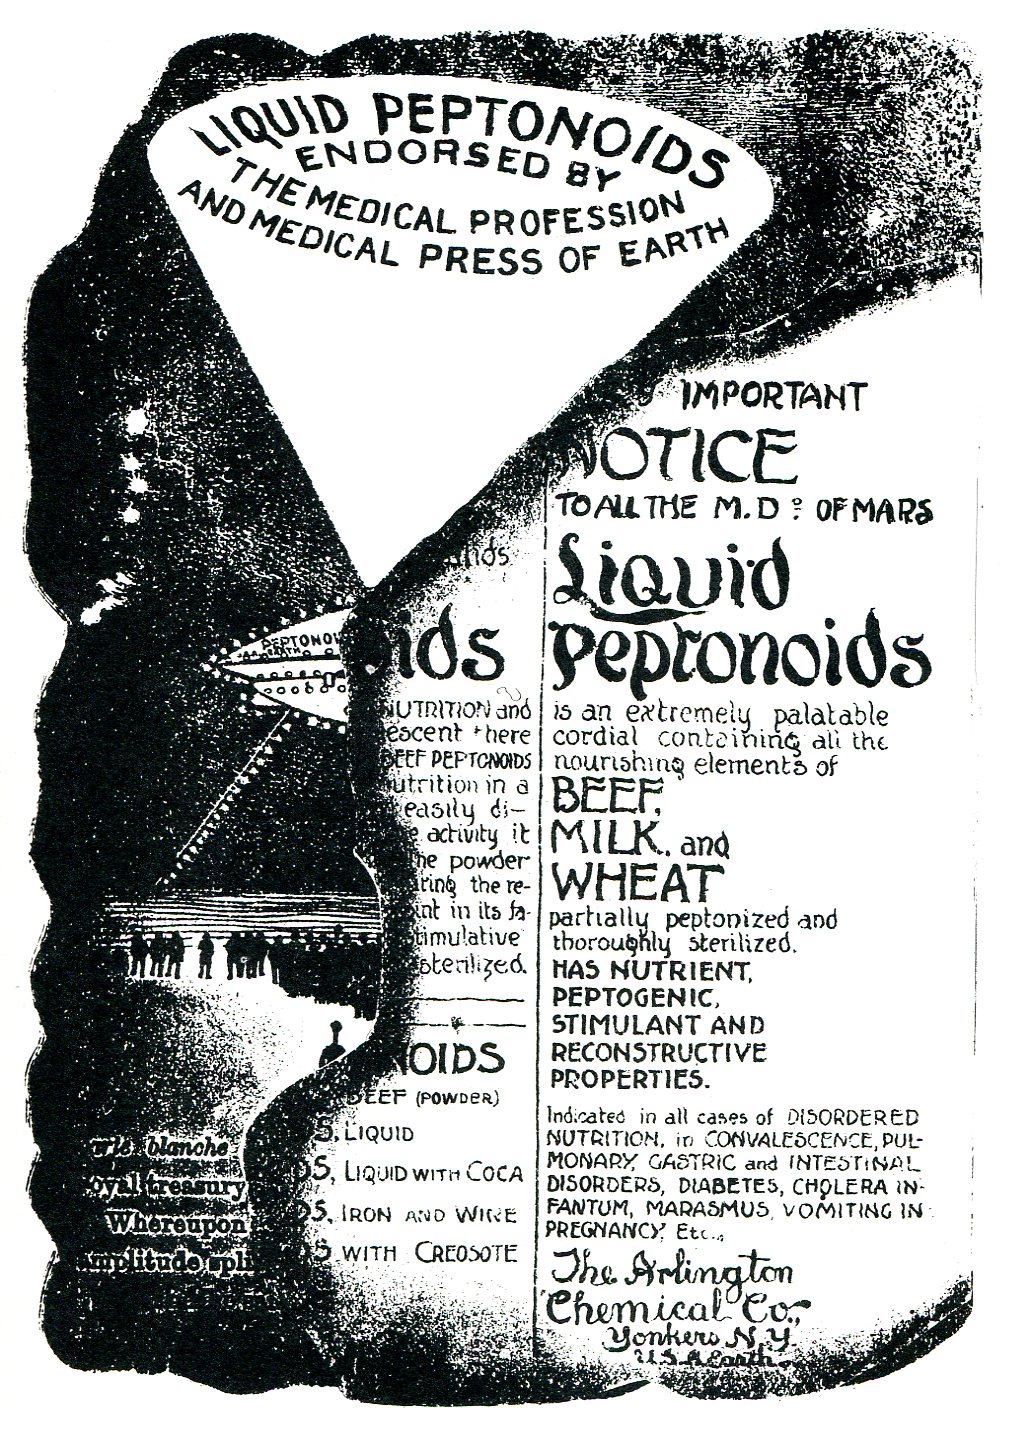 The Mars Gazette 1975